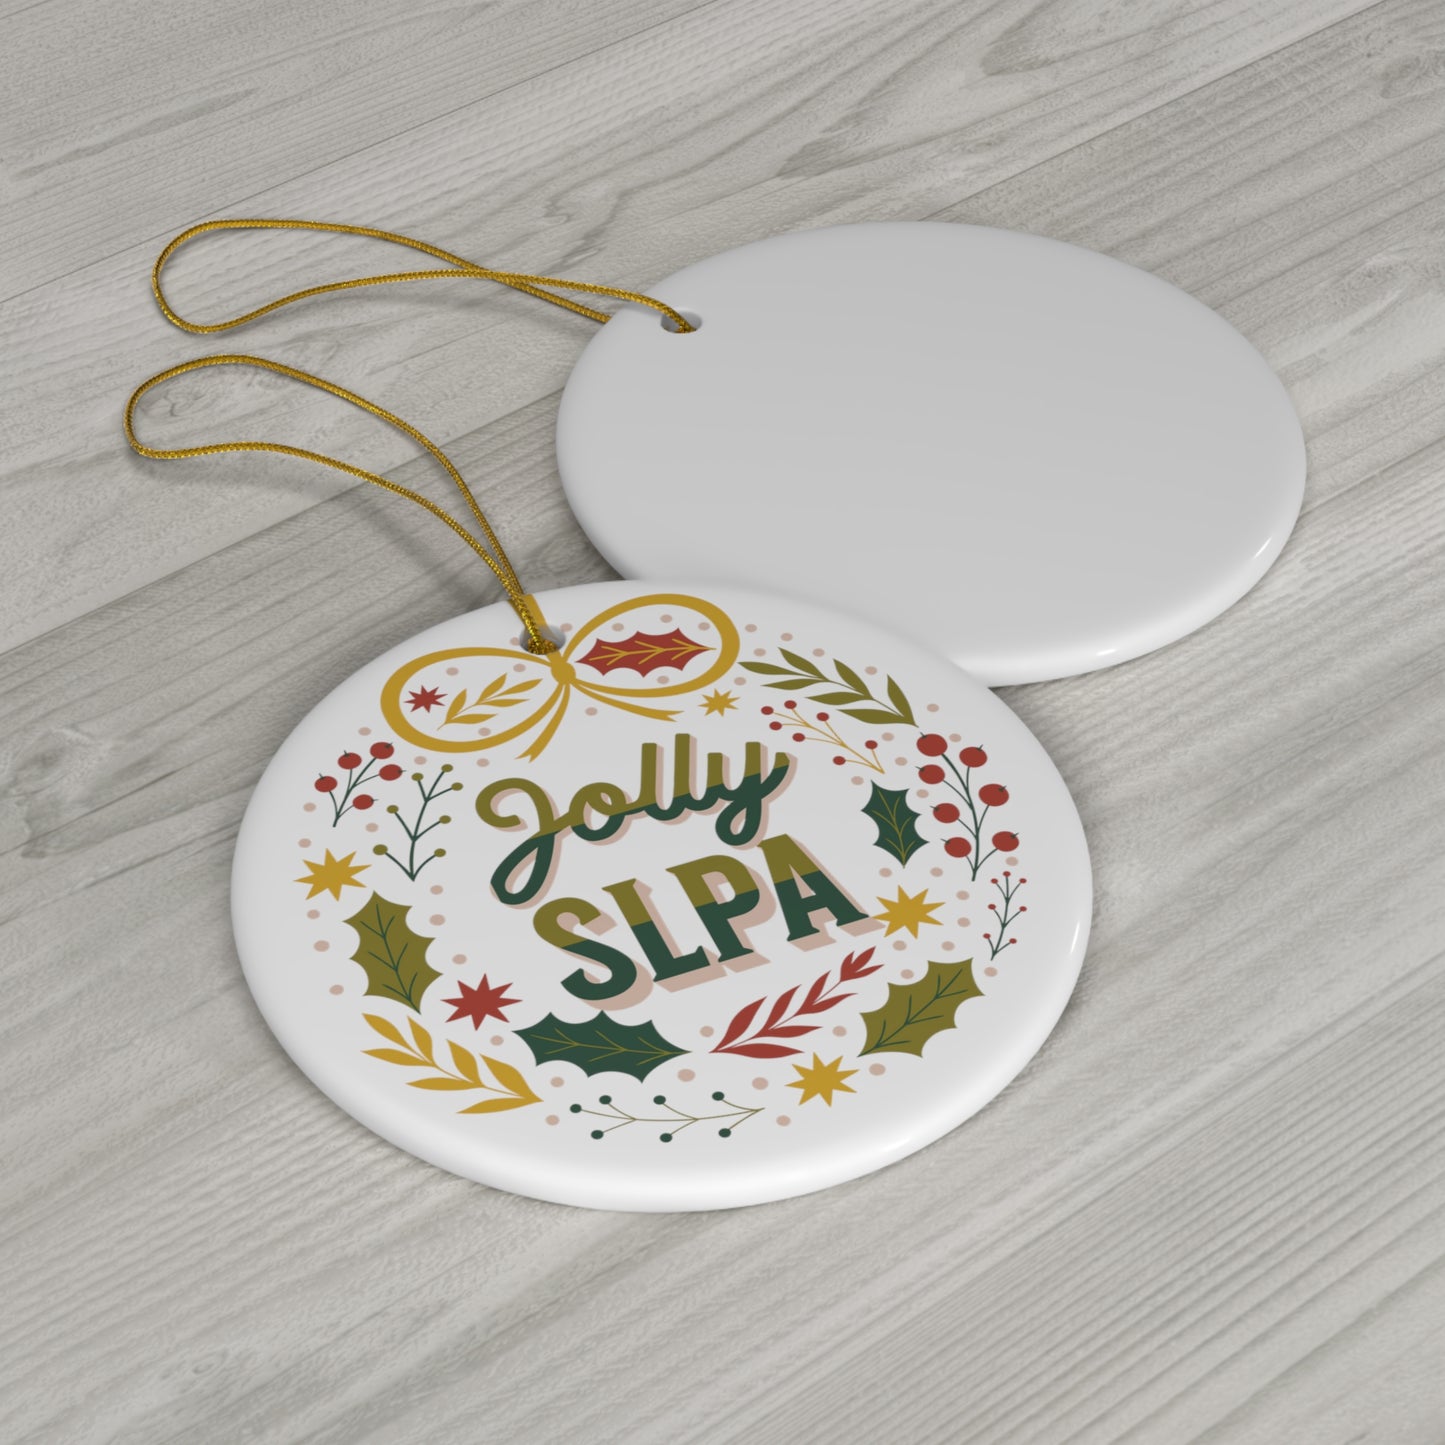 Jolly SLPA Wreath Christmas Ornament - 4 Options